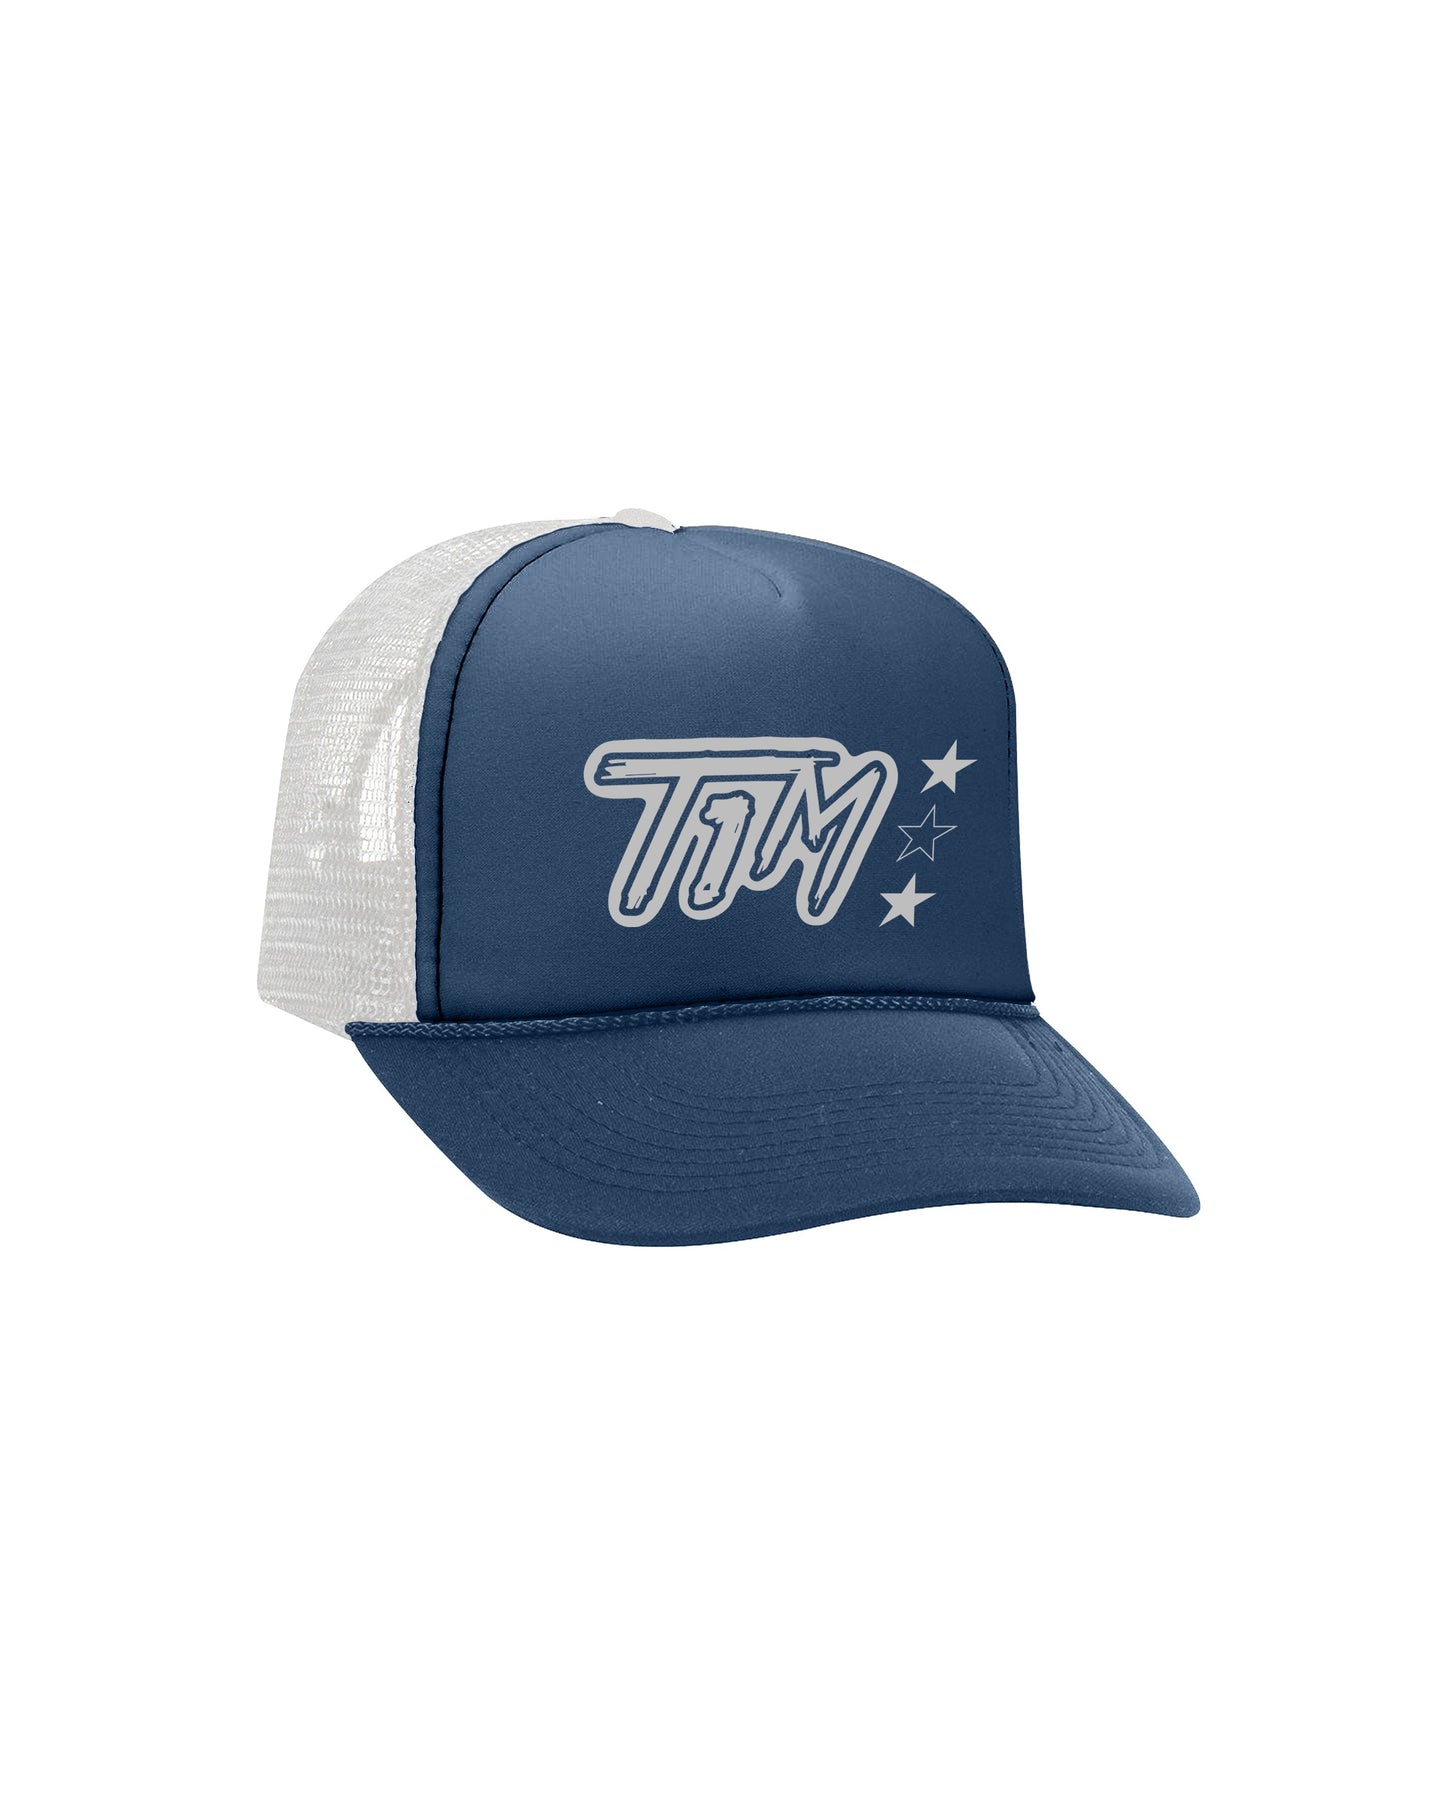 T1M NAVY BLUE TRUCKER CAP